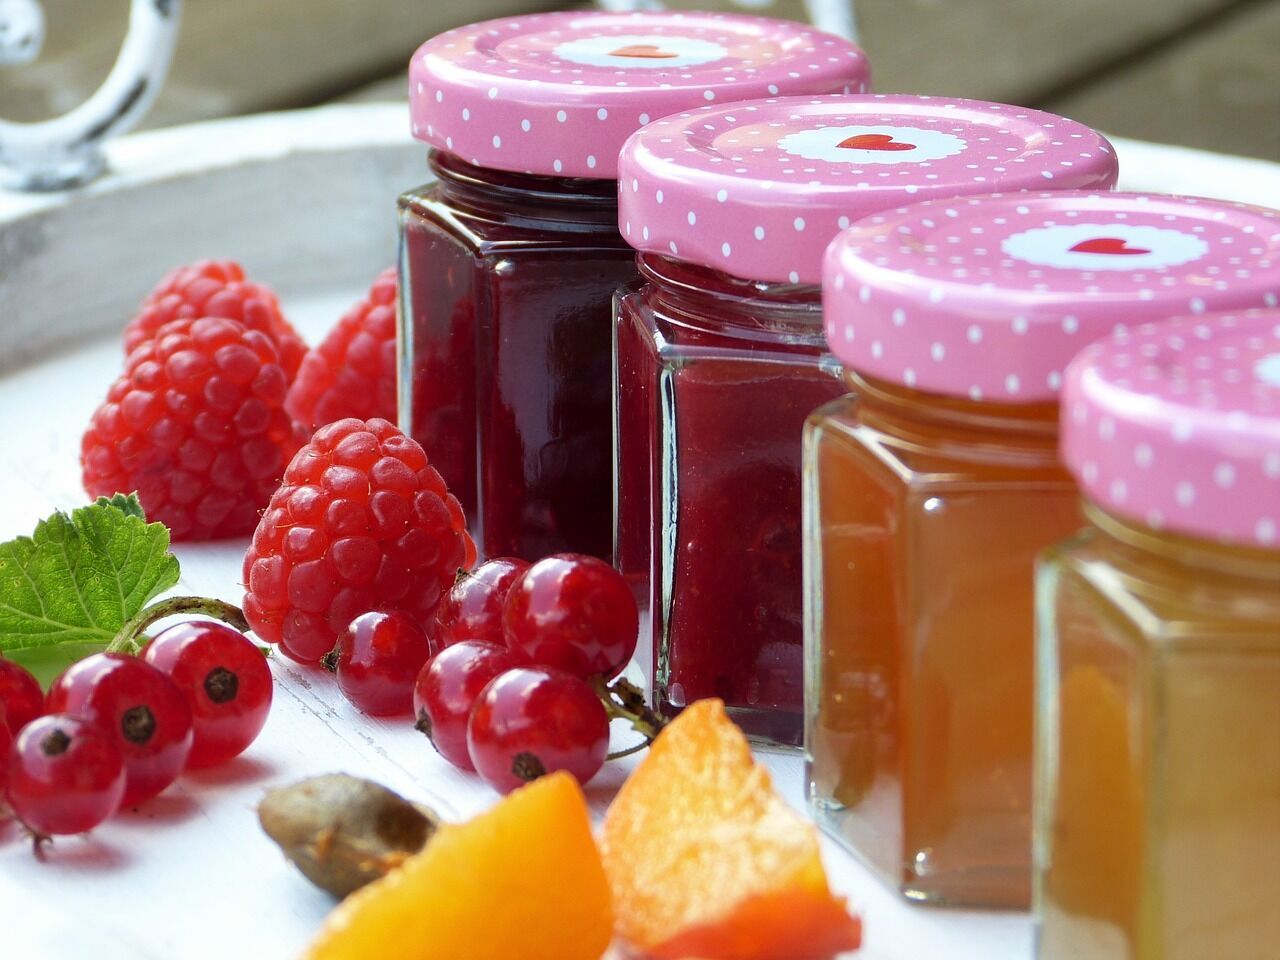 Homemade jam from berries